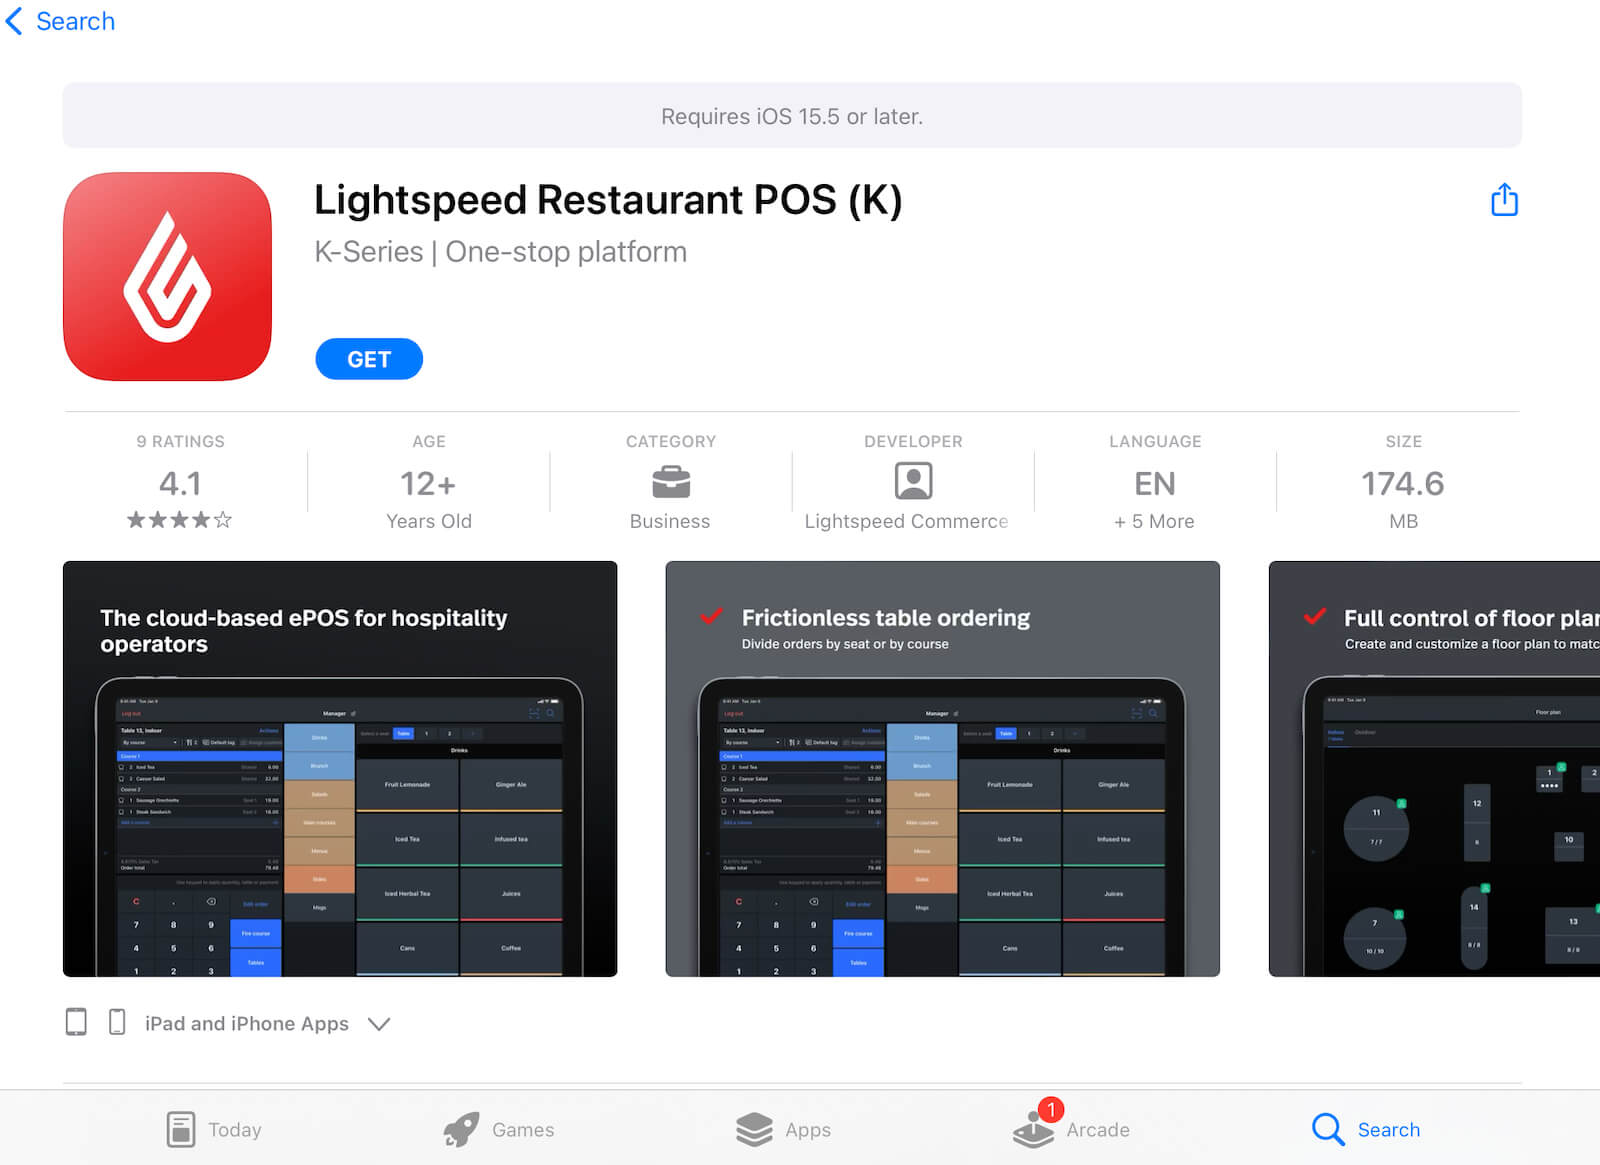 Application Ligtspeed Restaurant POS (K) sur l’App Store d’Apple